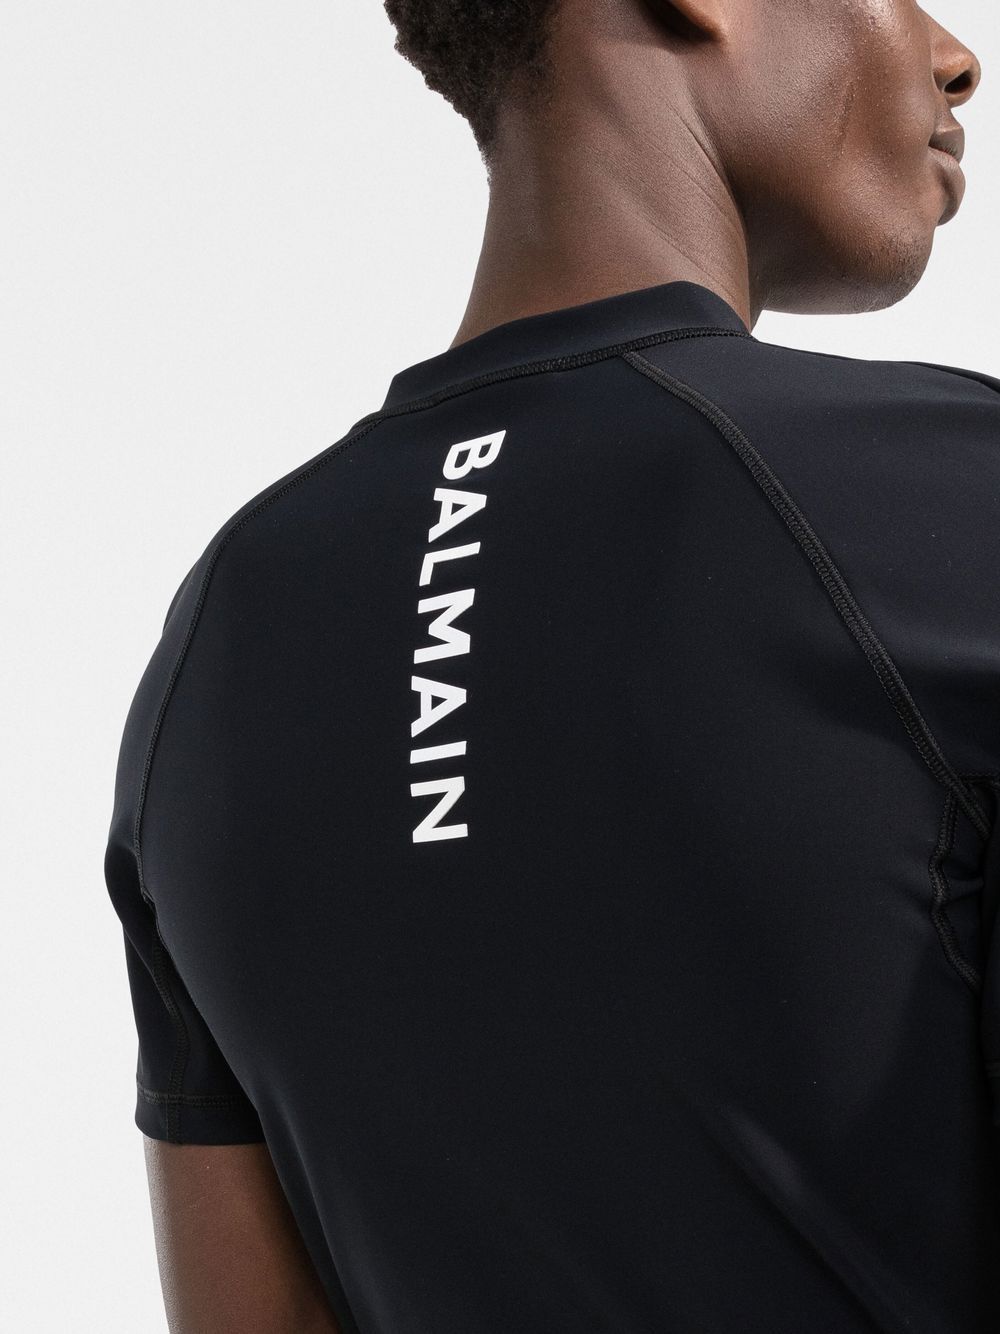 Balmain Black Crew Neck Shirt